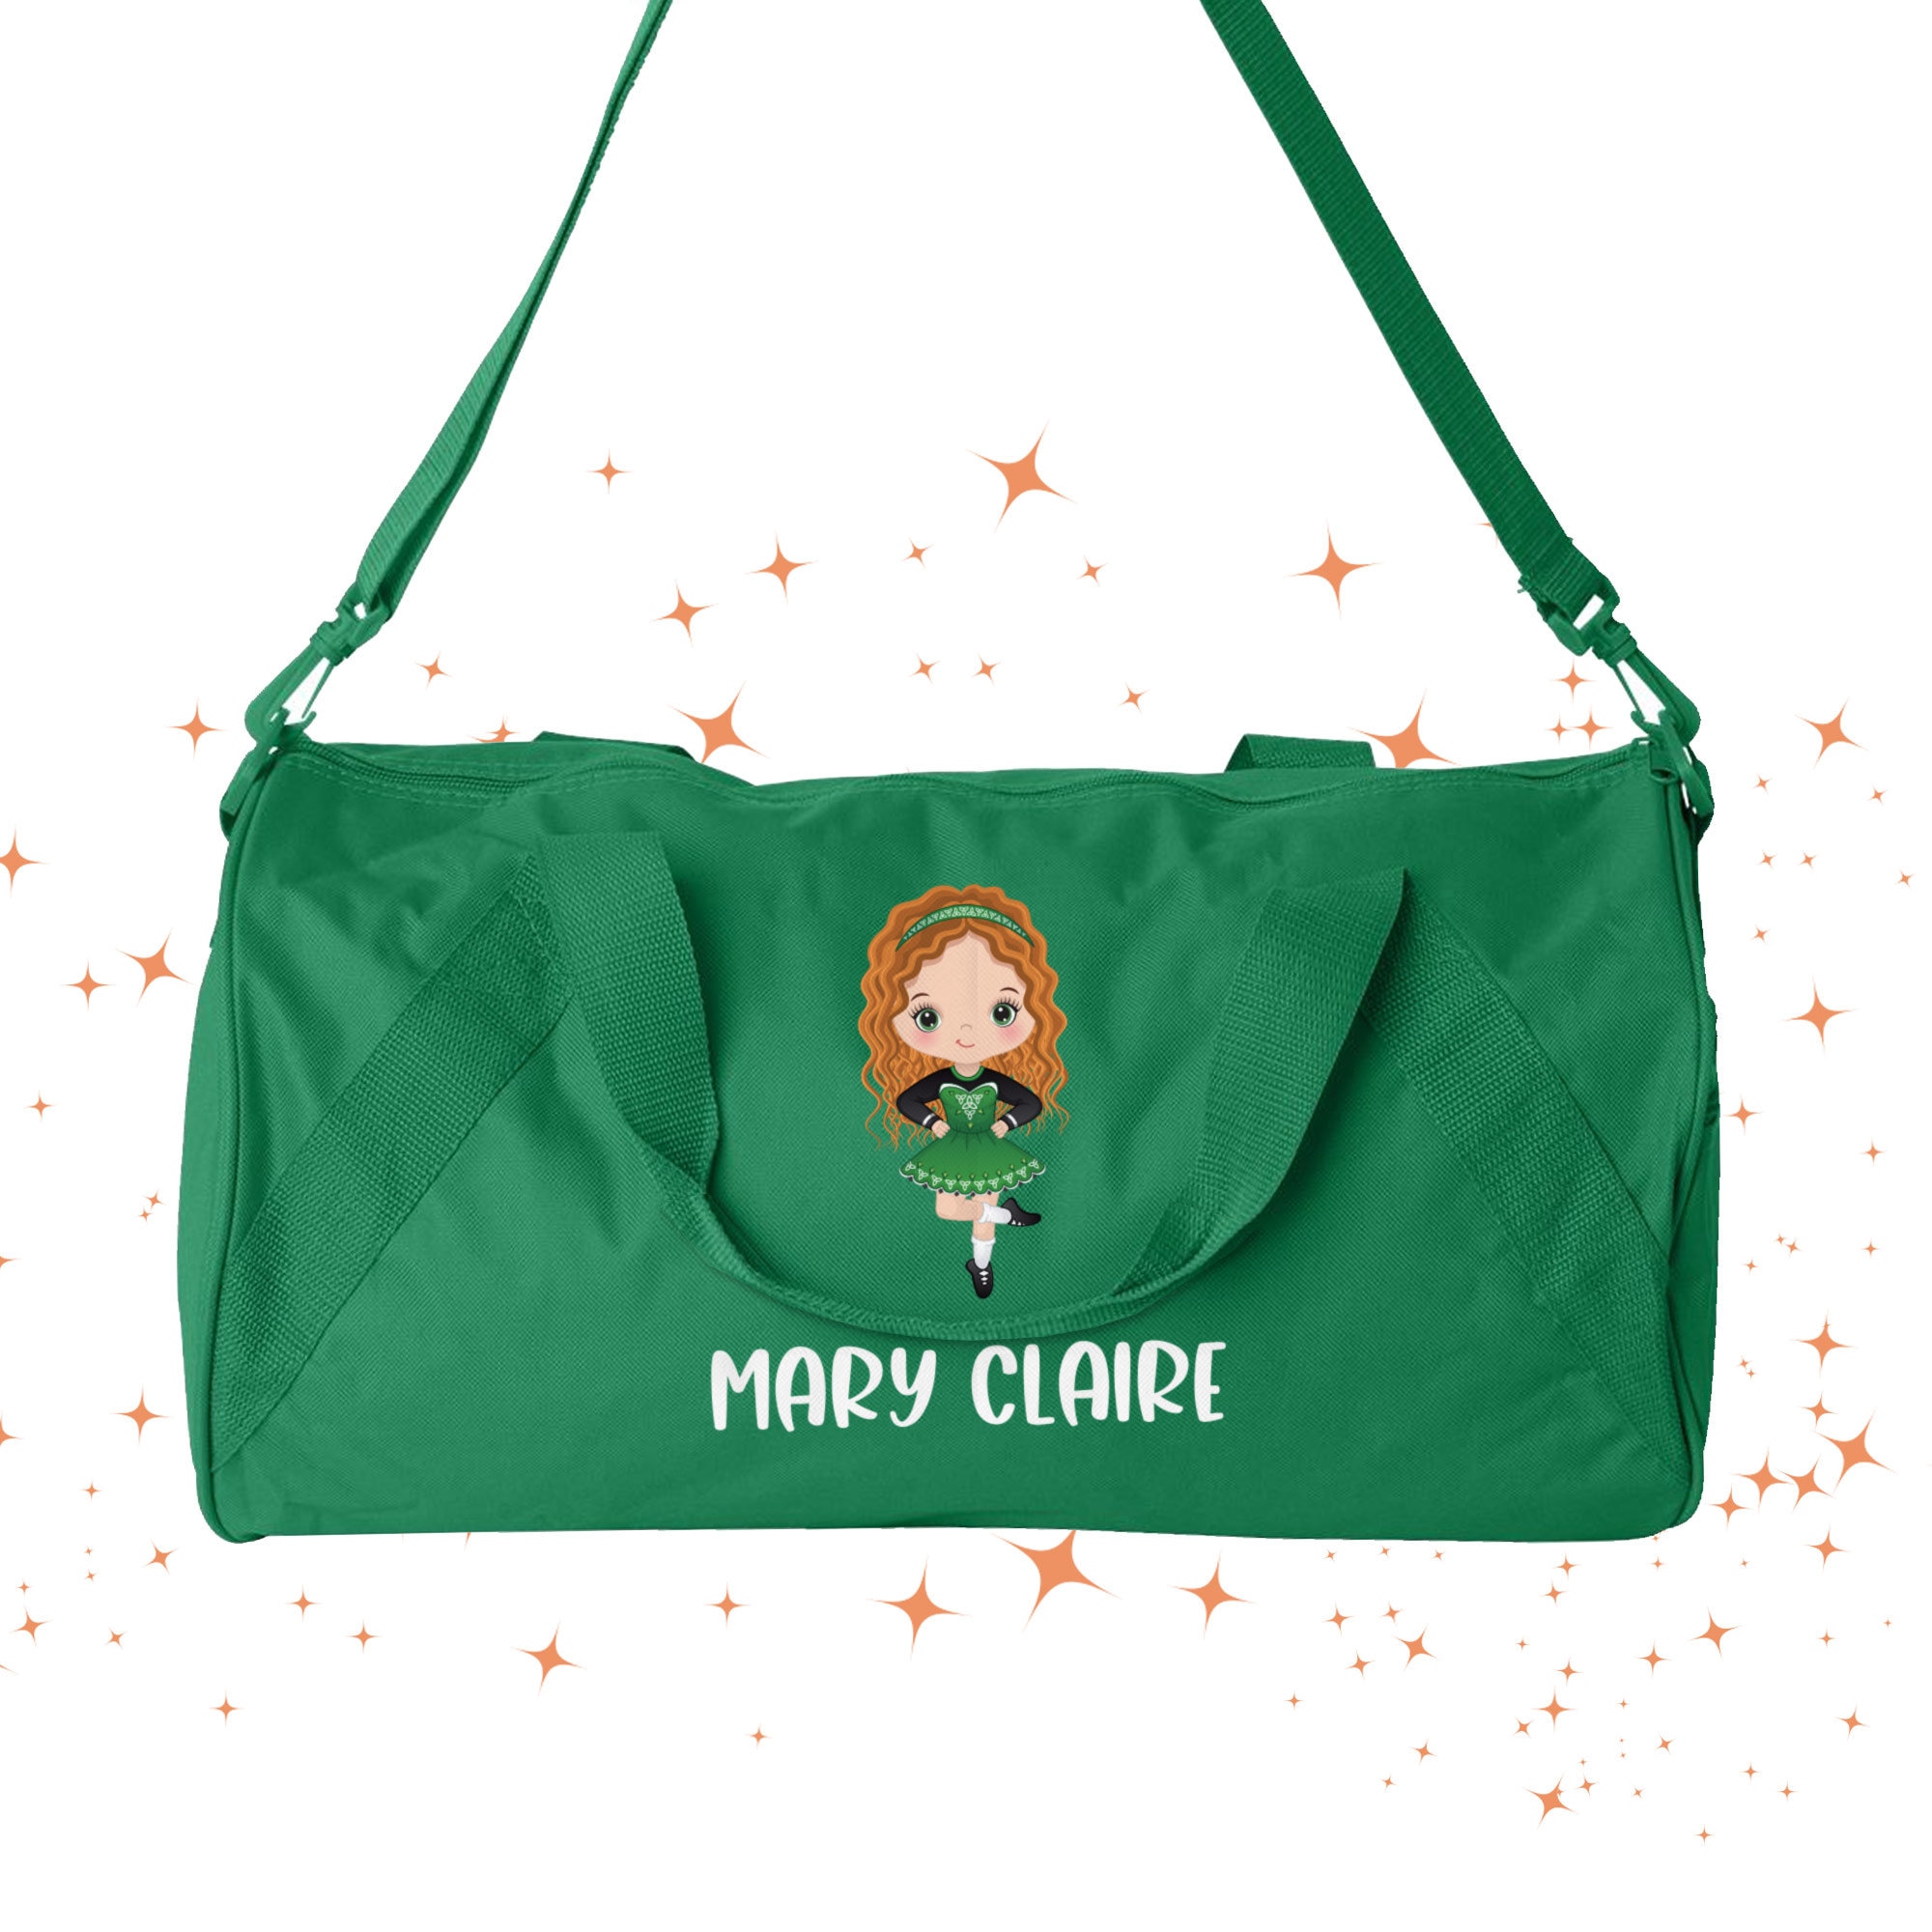 Green/olive Corduroy Medium Tote Bag With Two Side Pockets, Shoulder Bag,  Travel Bag, Birthday Gift, School Bag, Back to School 